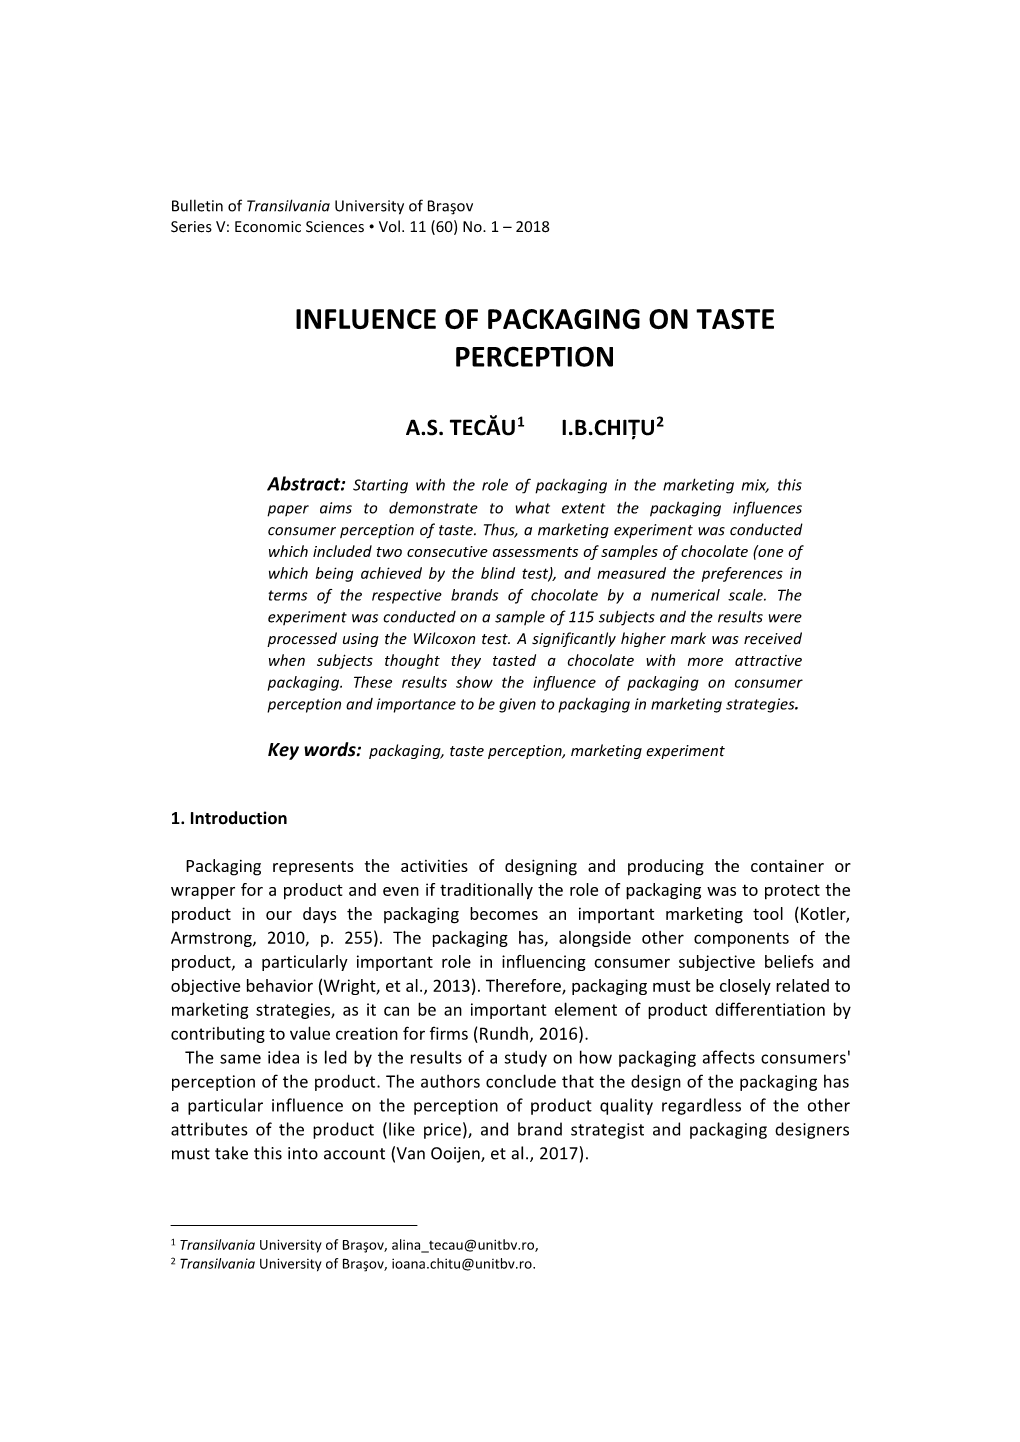 Influence of Packaging on Taste Perception